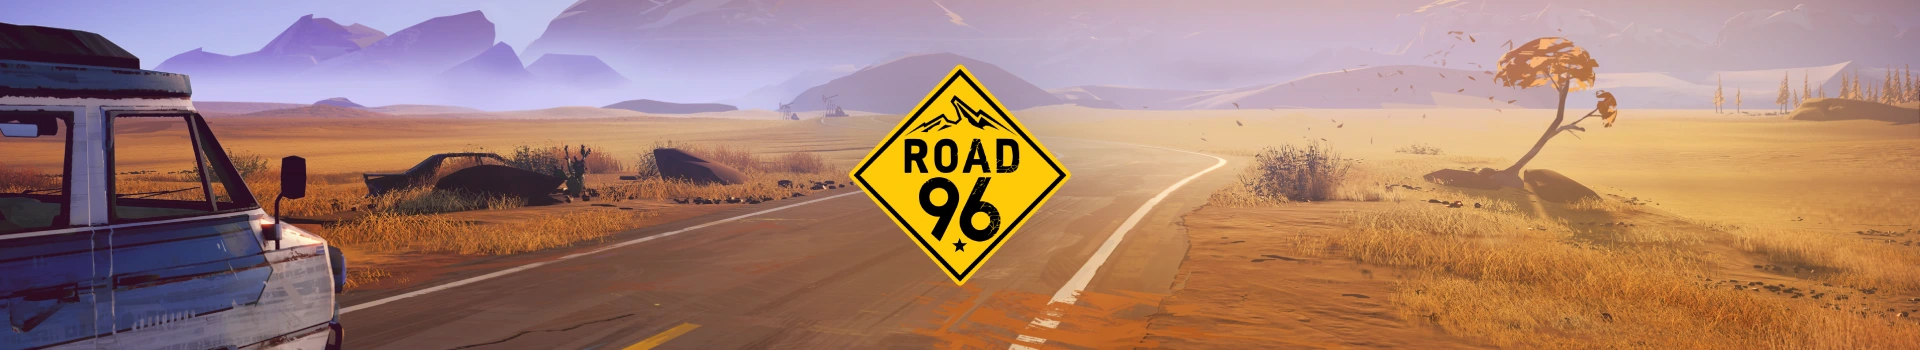 road-96-banner Image